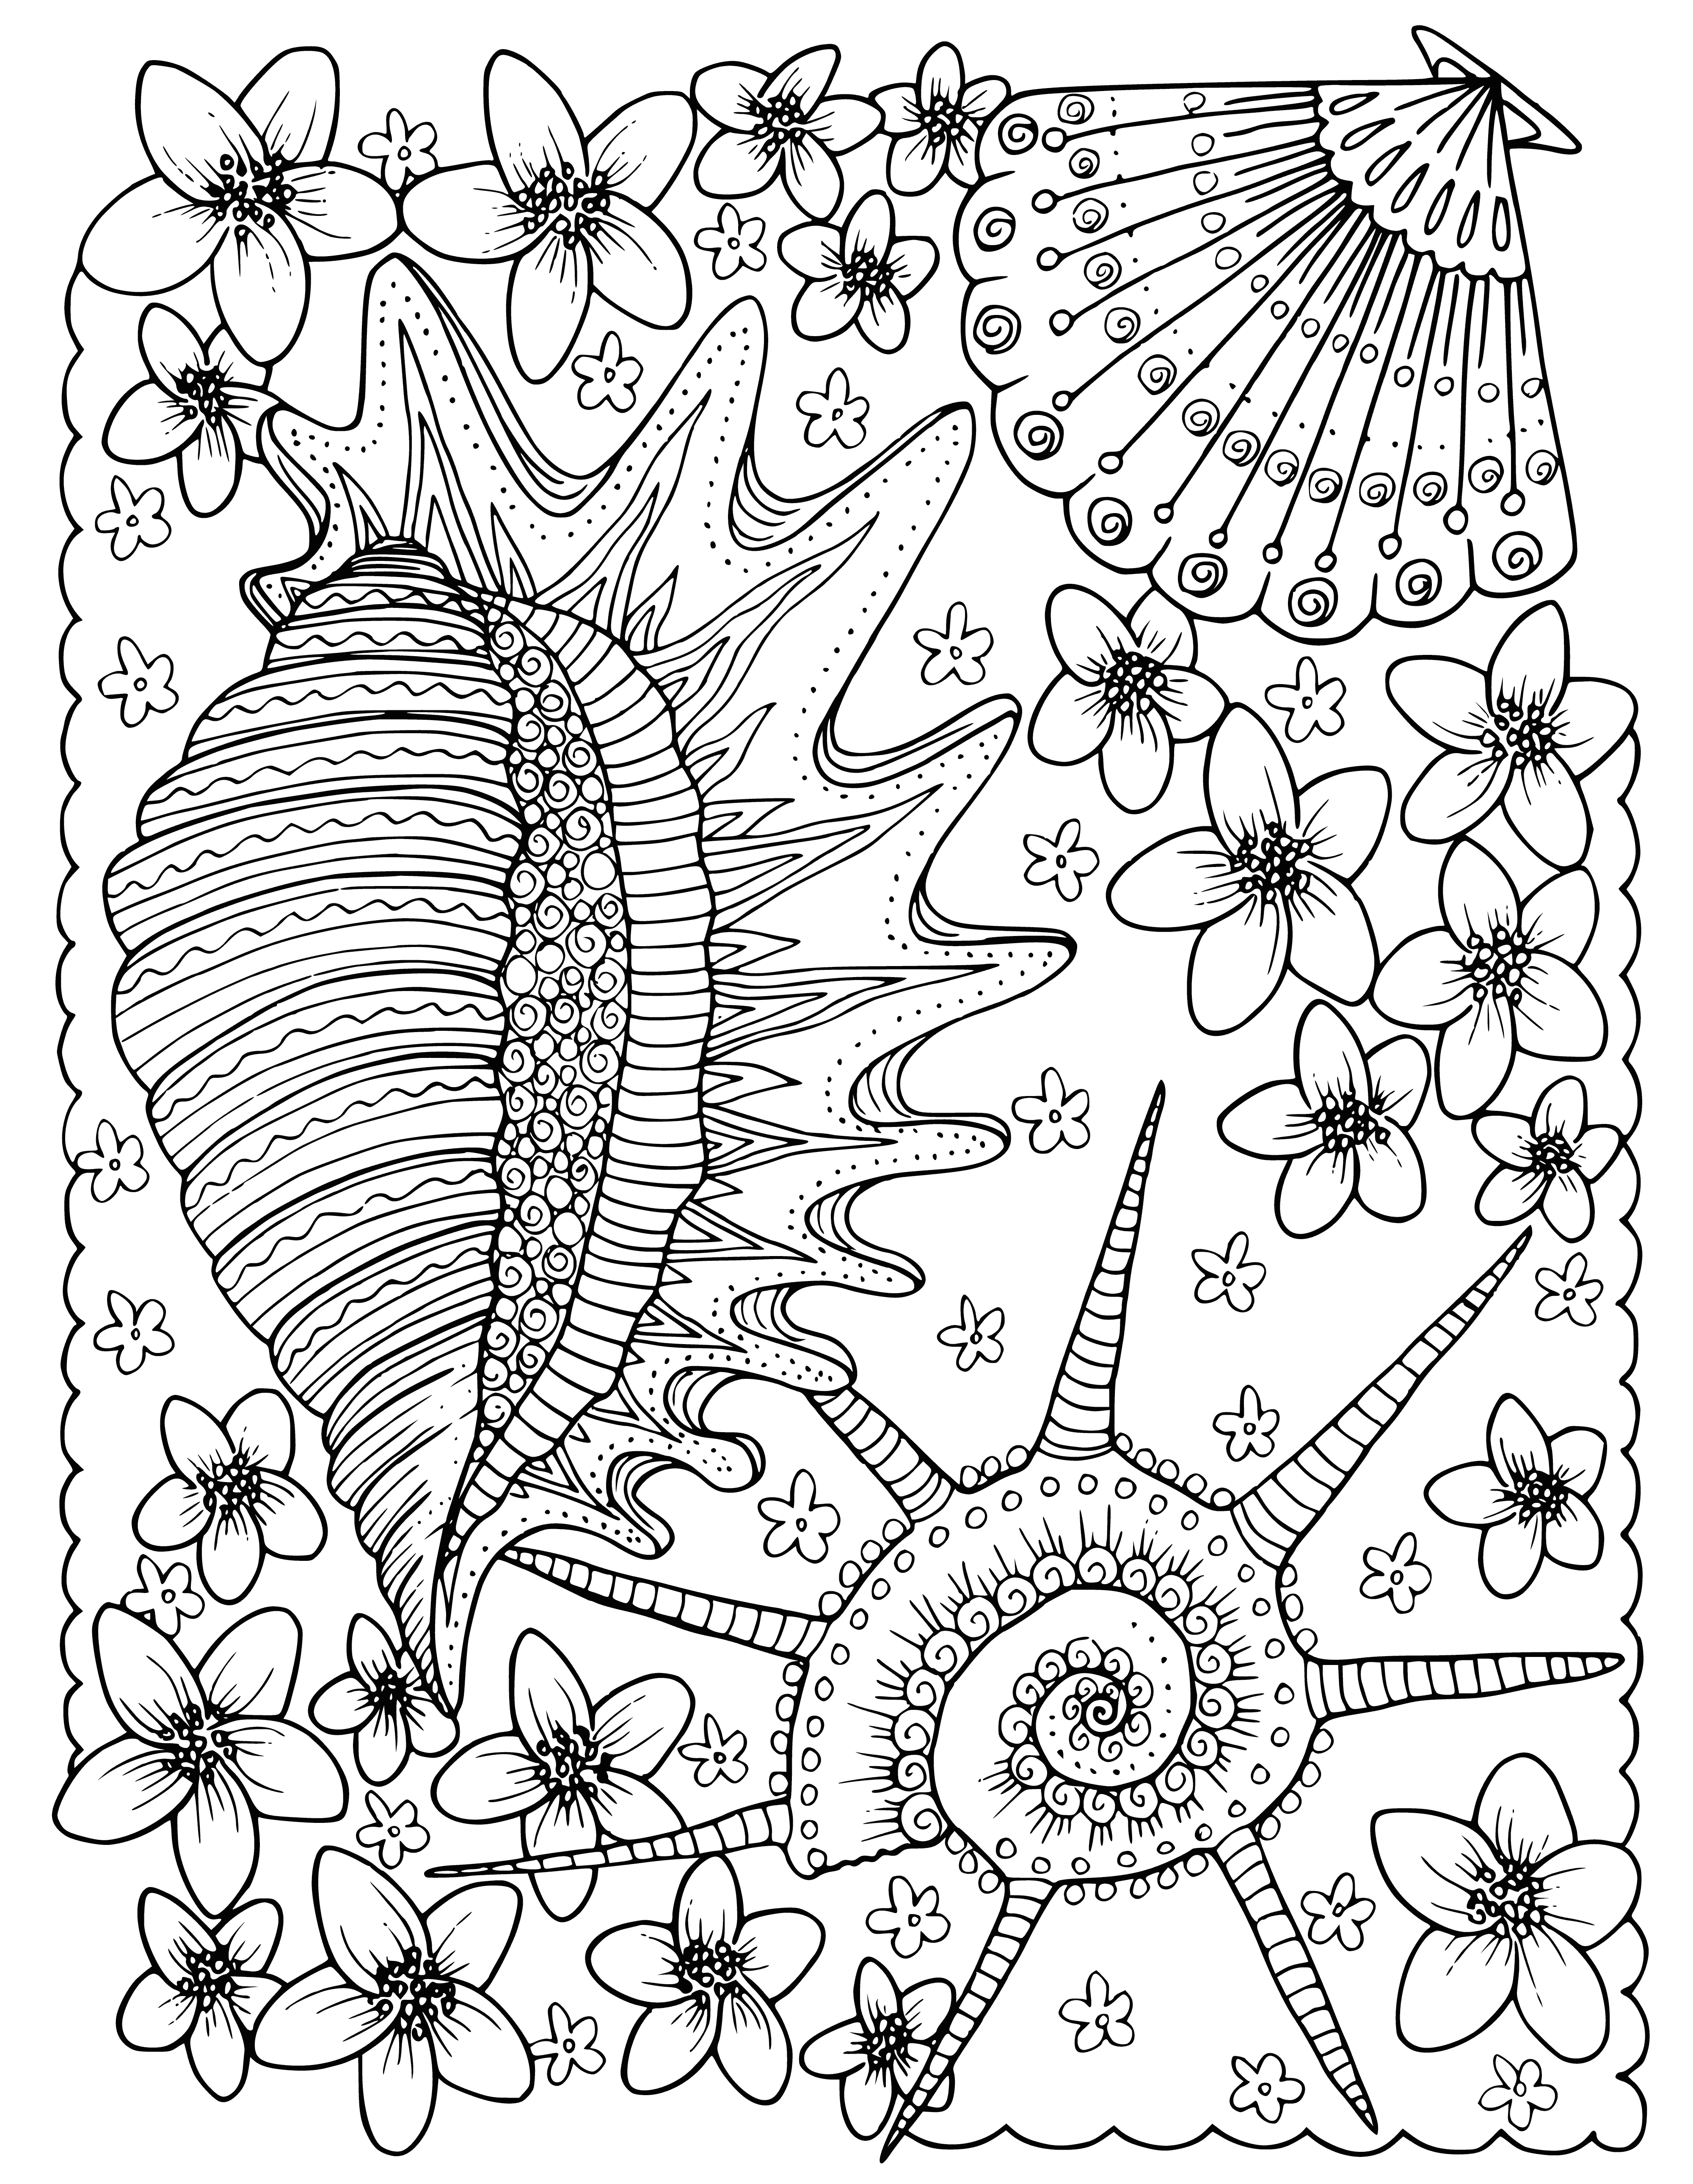 Sea shells coloring page